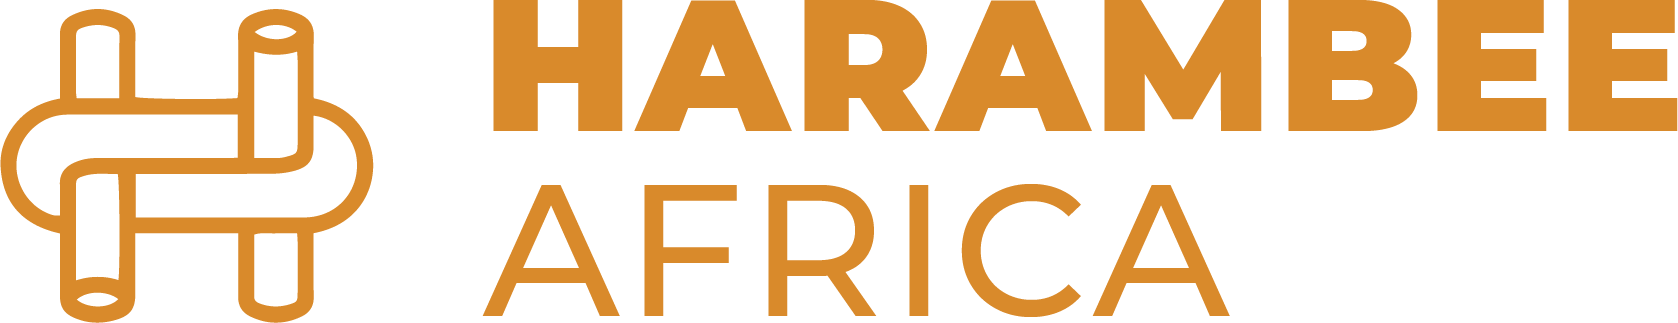 Harambee Africa